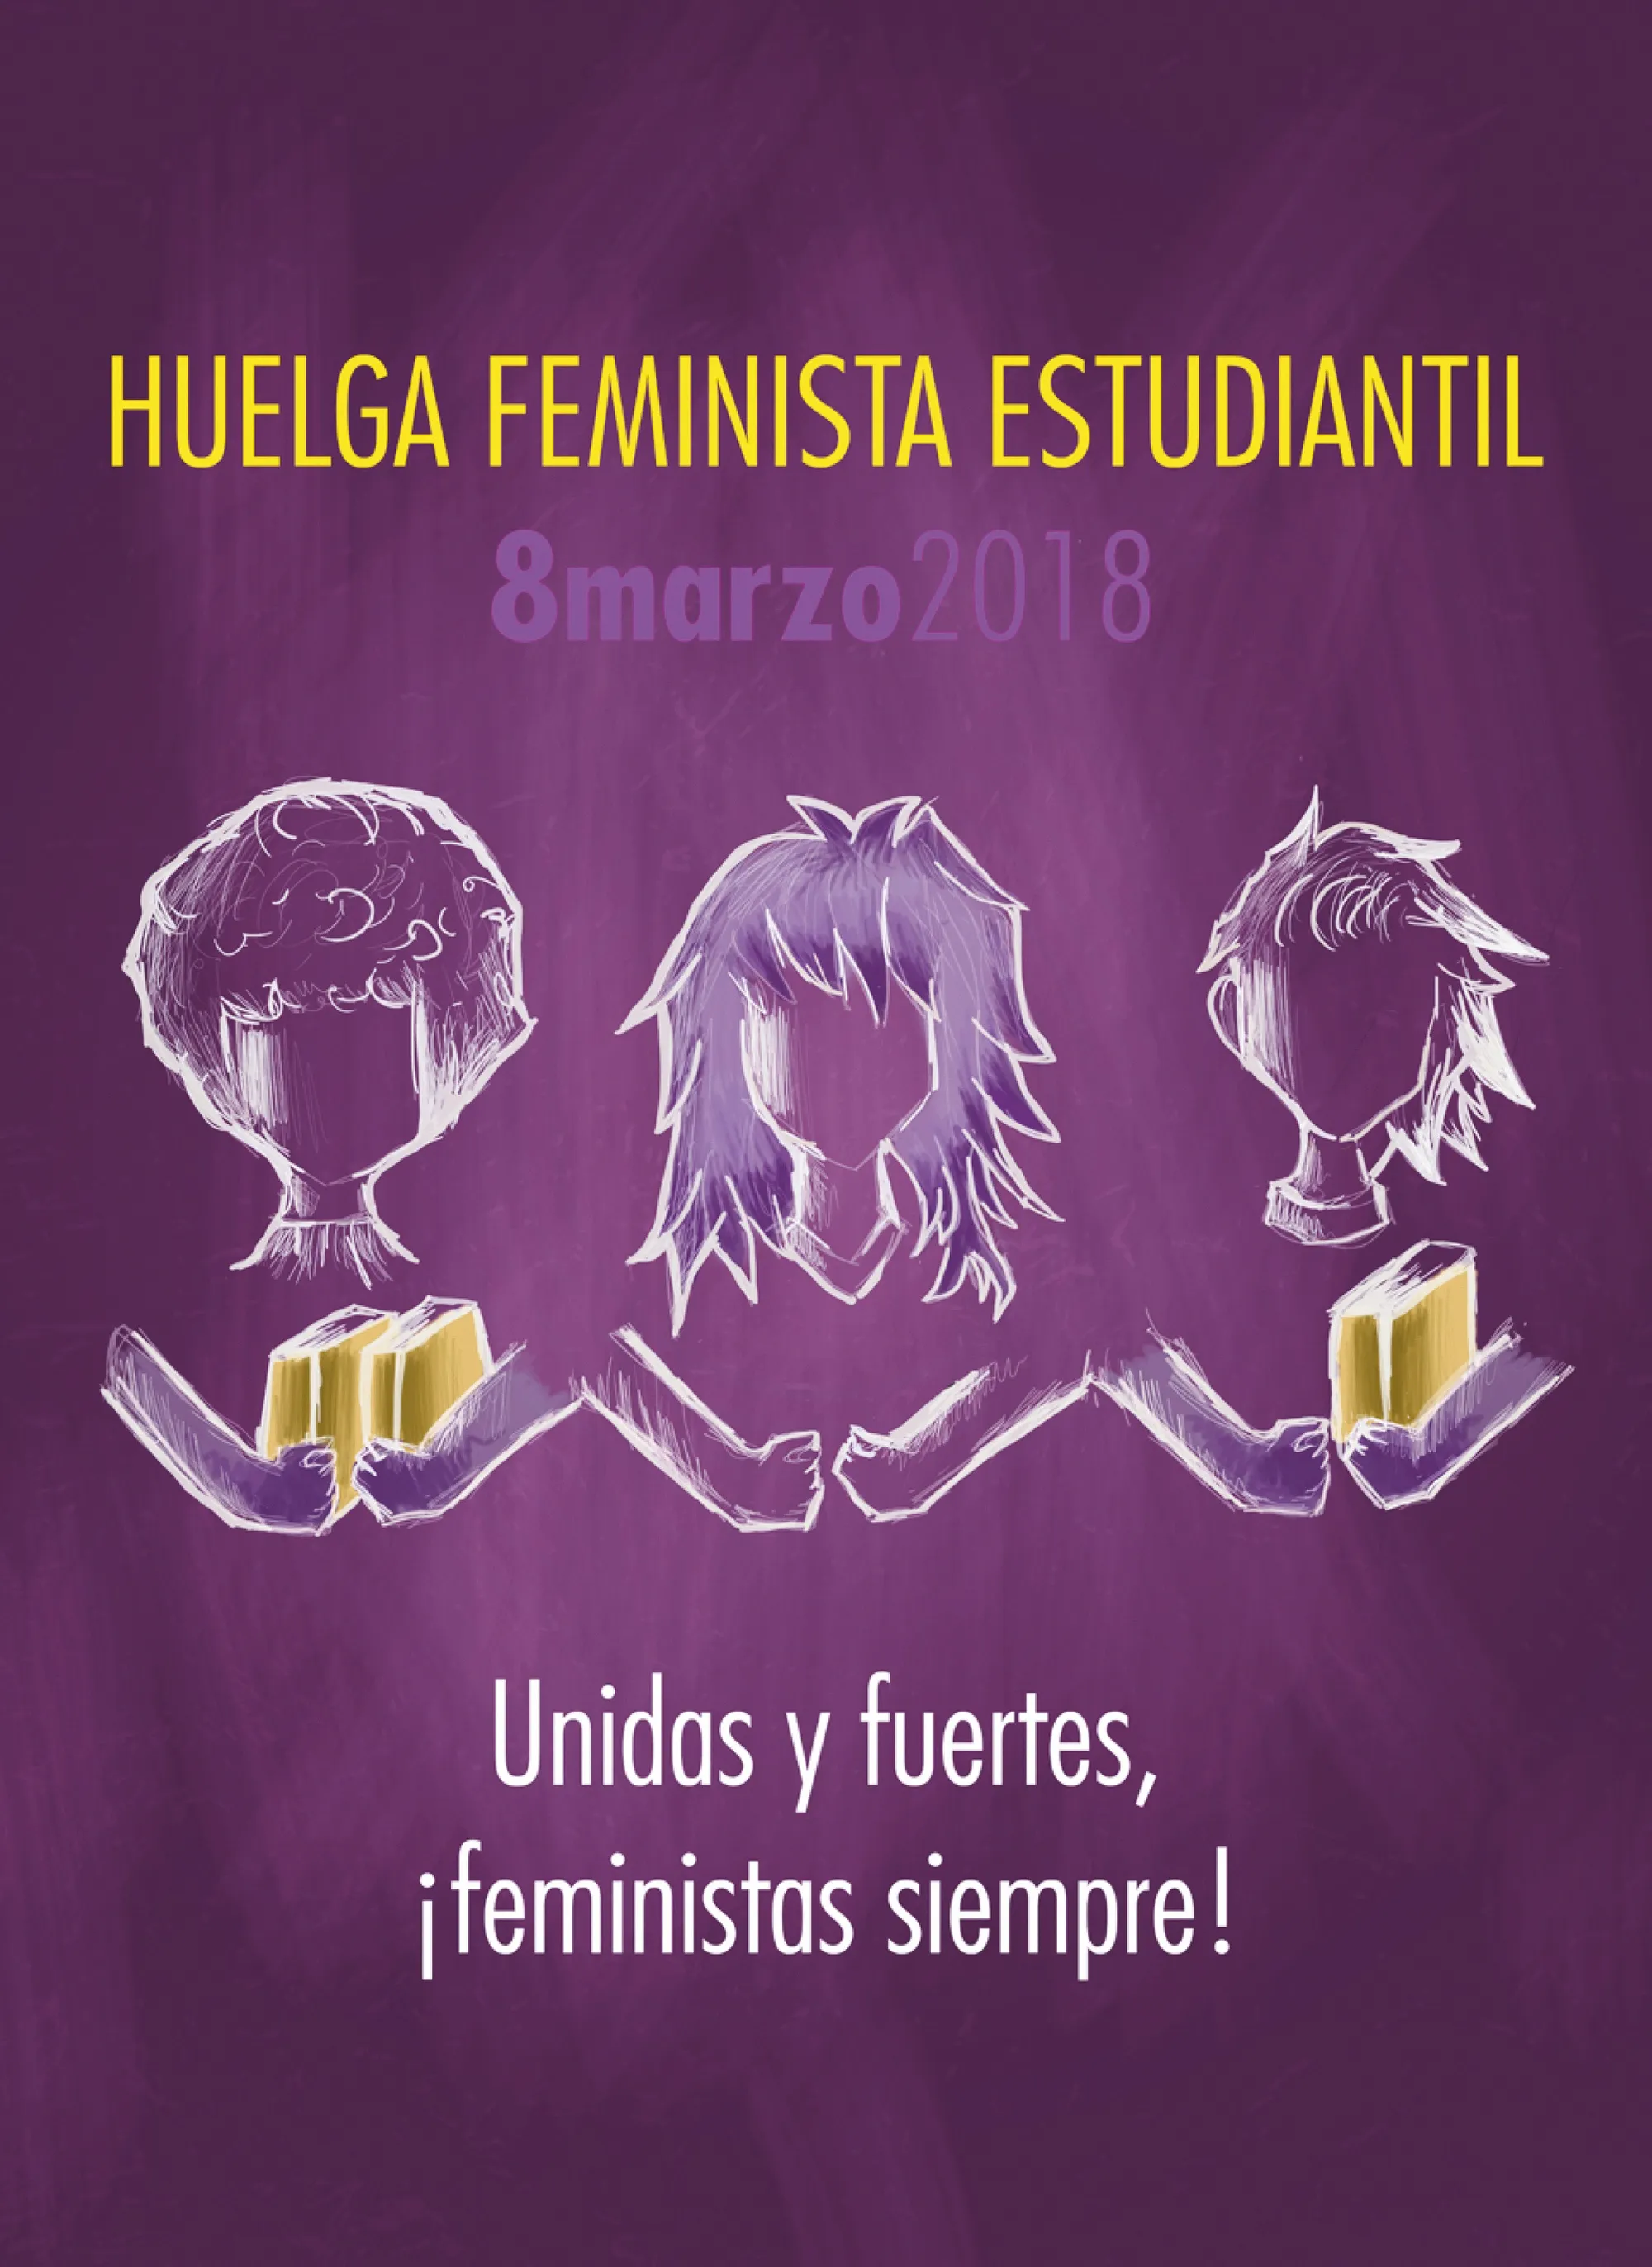 Folleto para la huelga feminista estudiantil en Aragón, 2018.